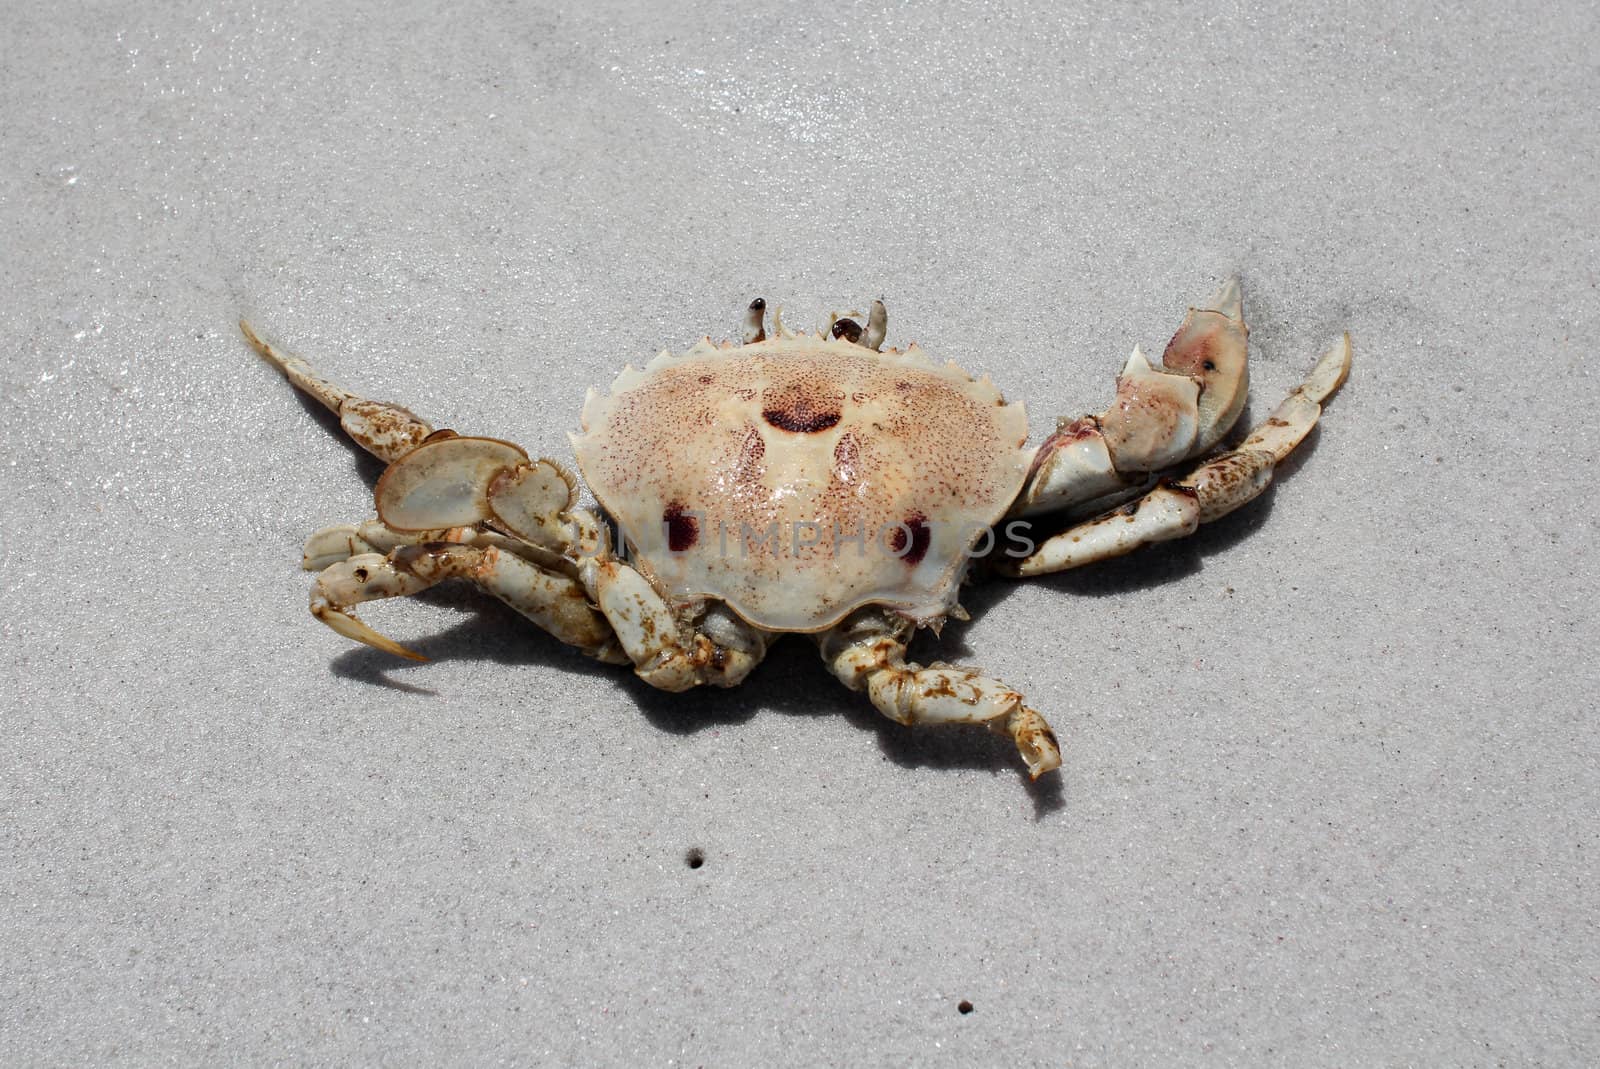 Crab on Beach by dwaschnig_photo